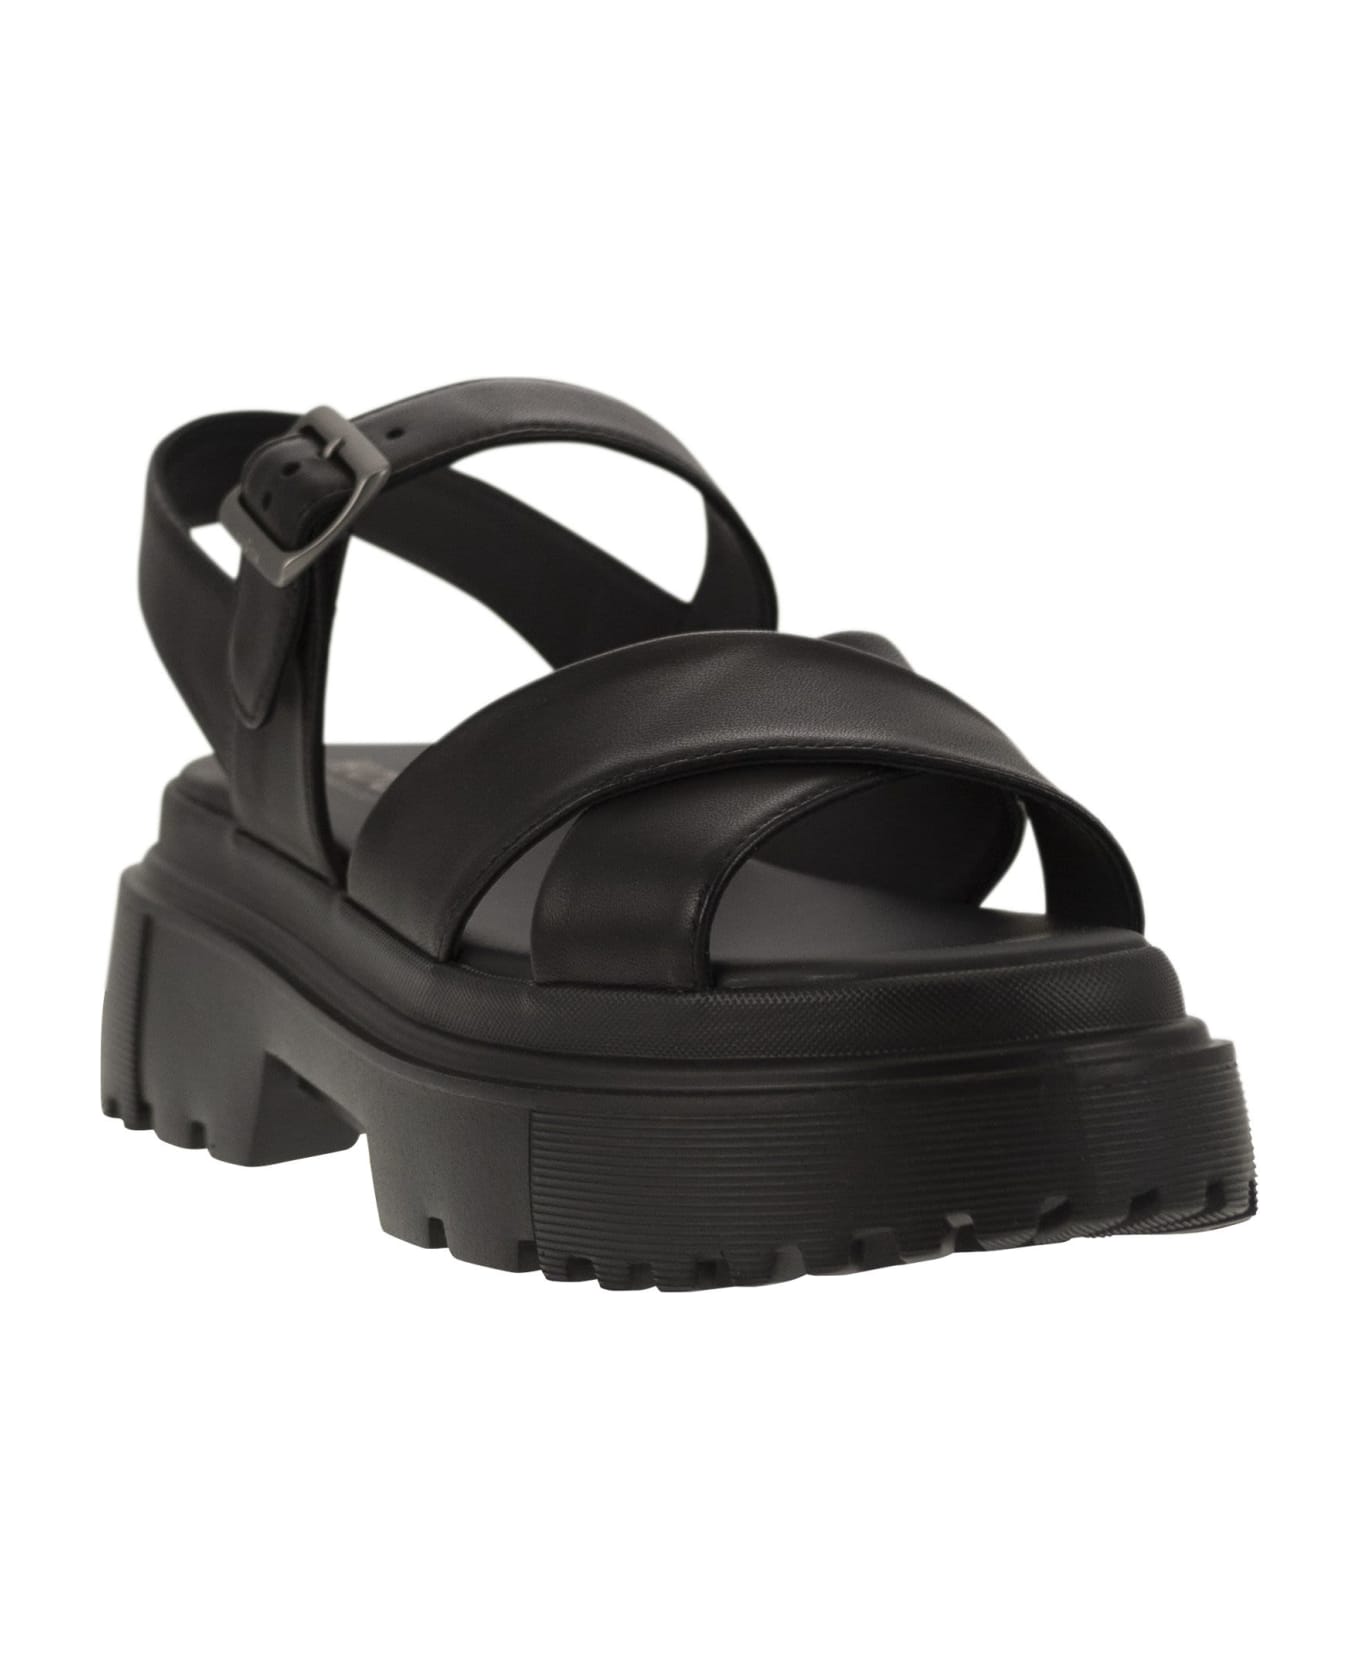 Hogan Leather Sandal With Midsole - Black サンダル